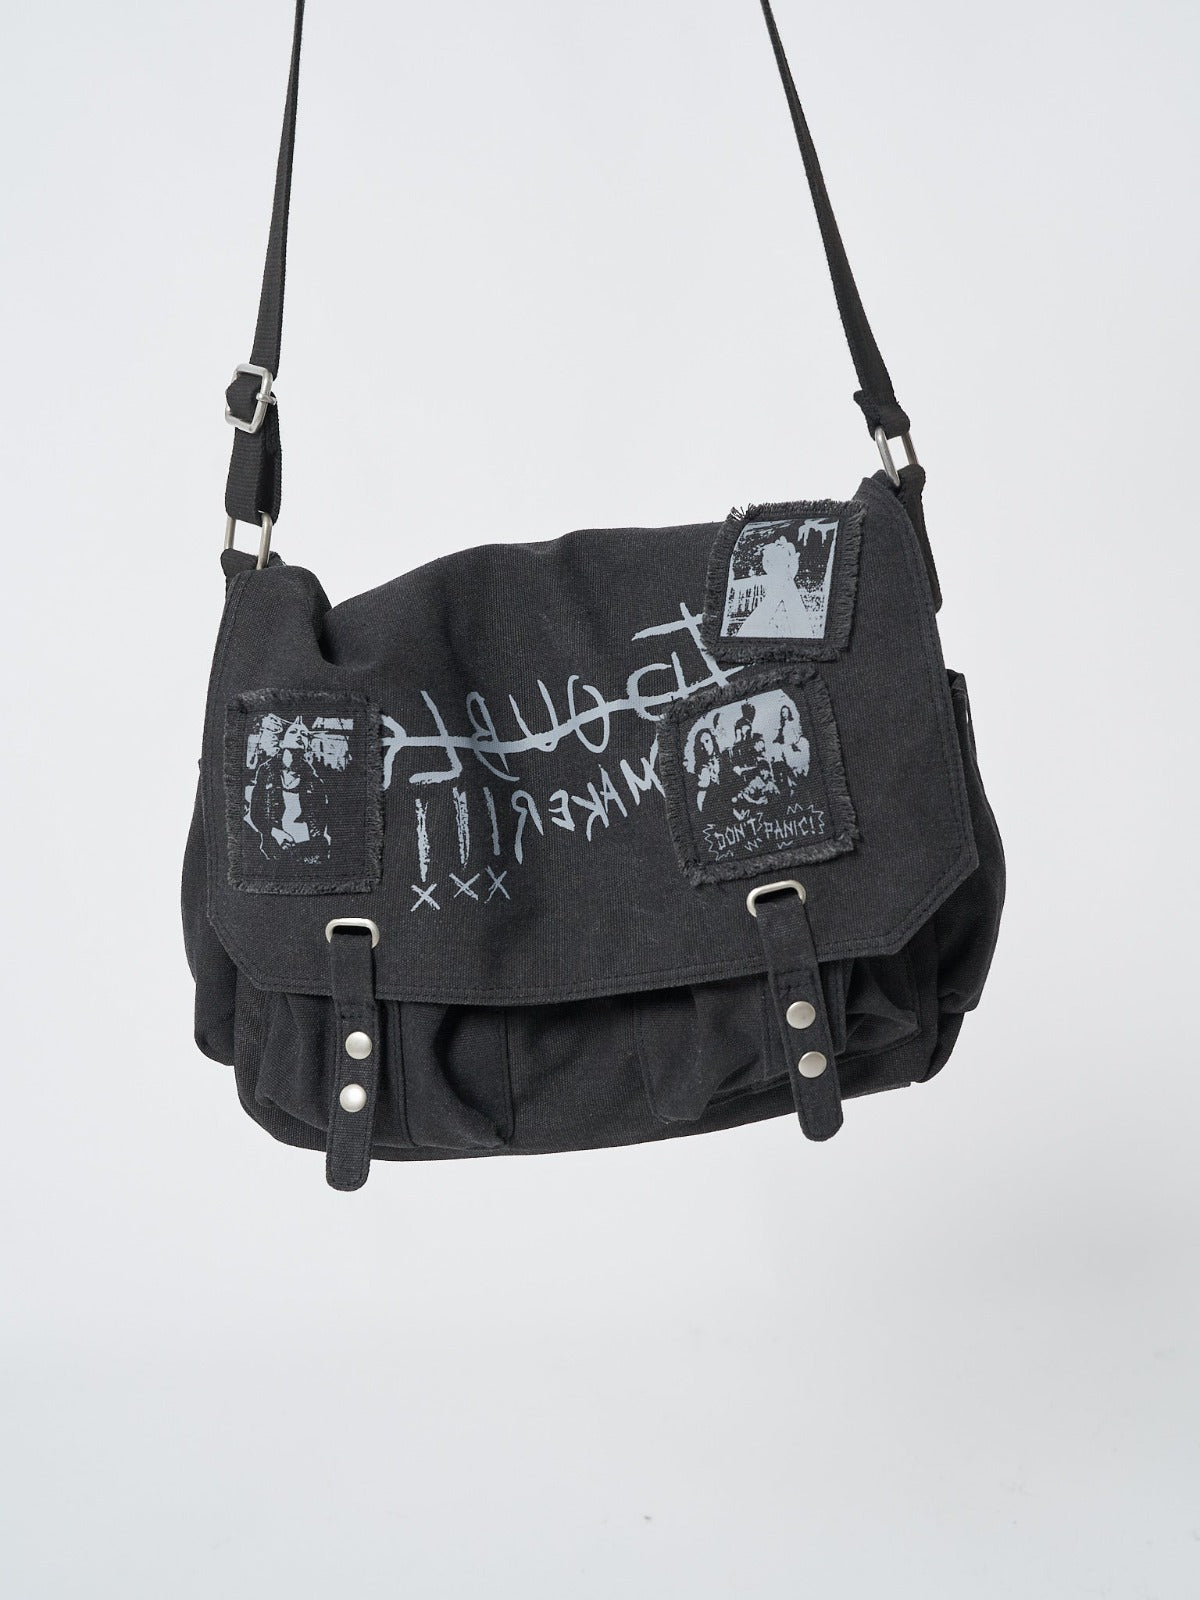 Troublemaker Black Canvas Messenger Bag - Minga London